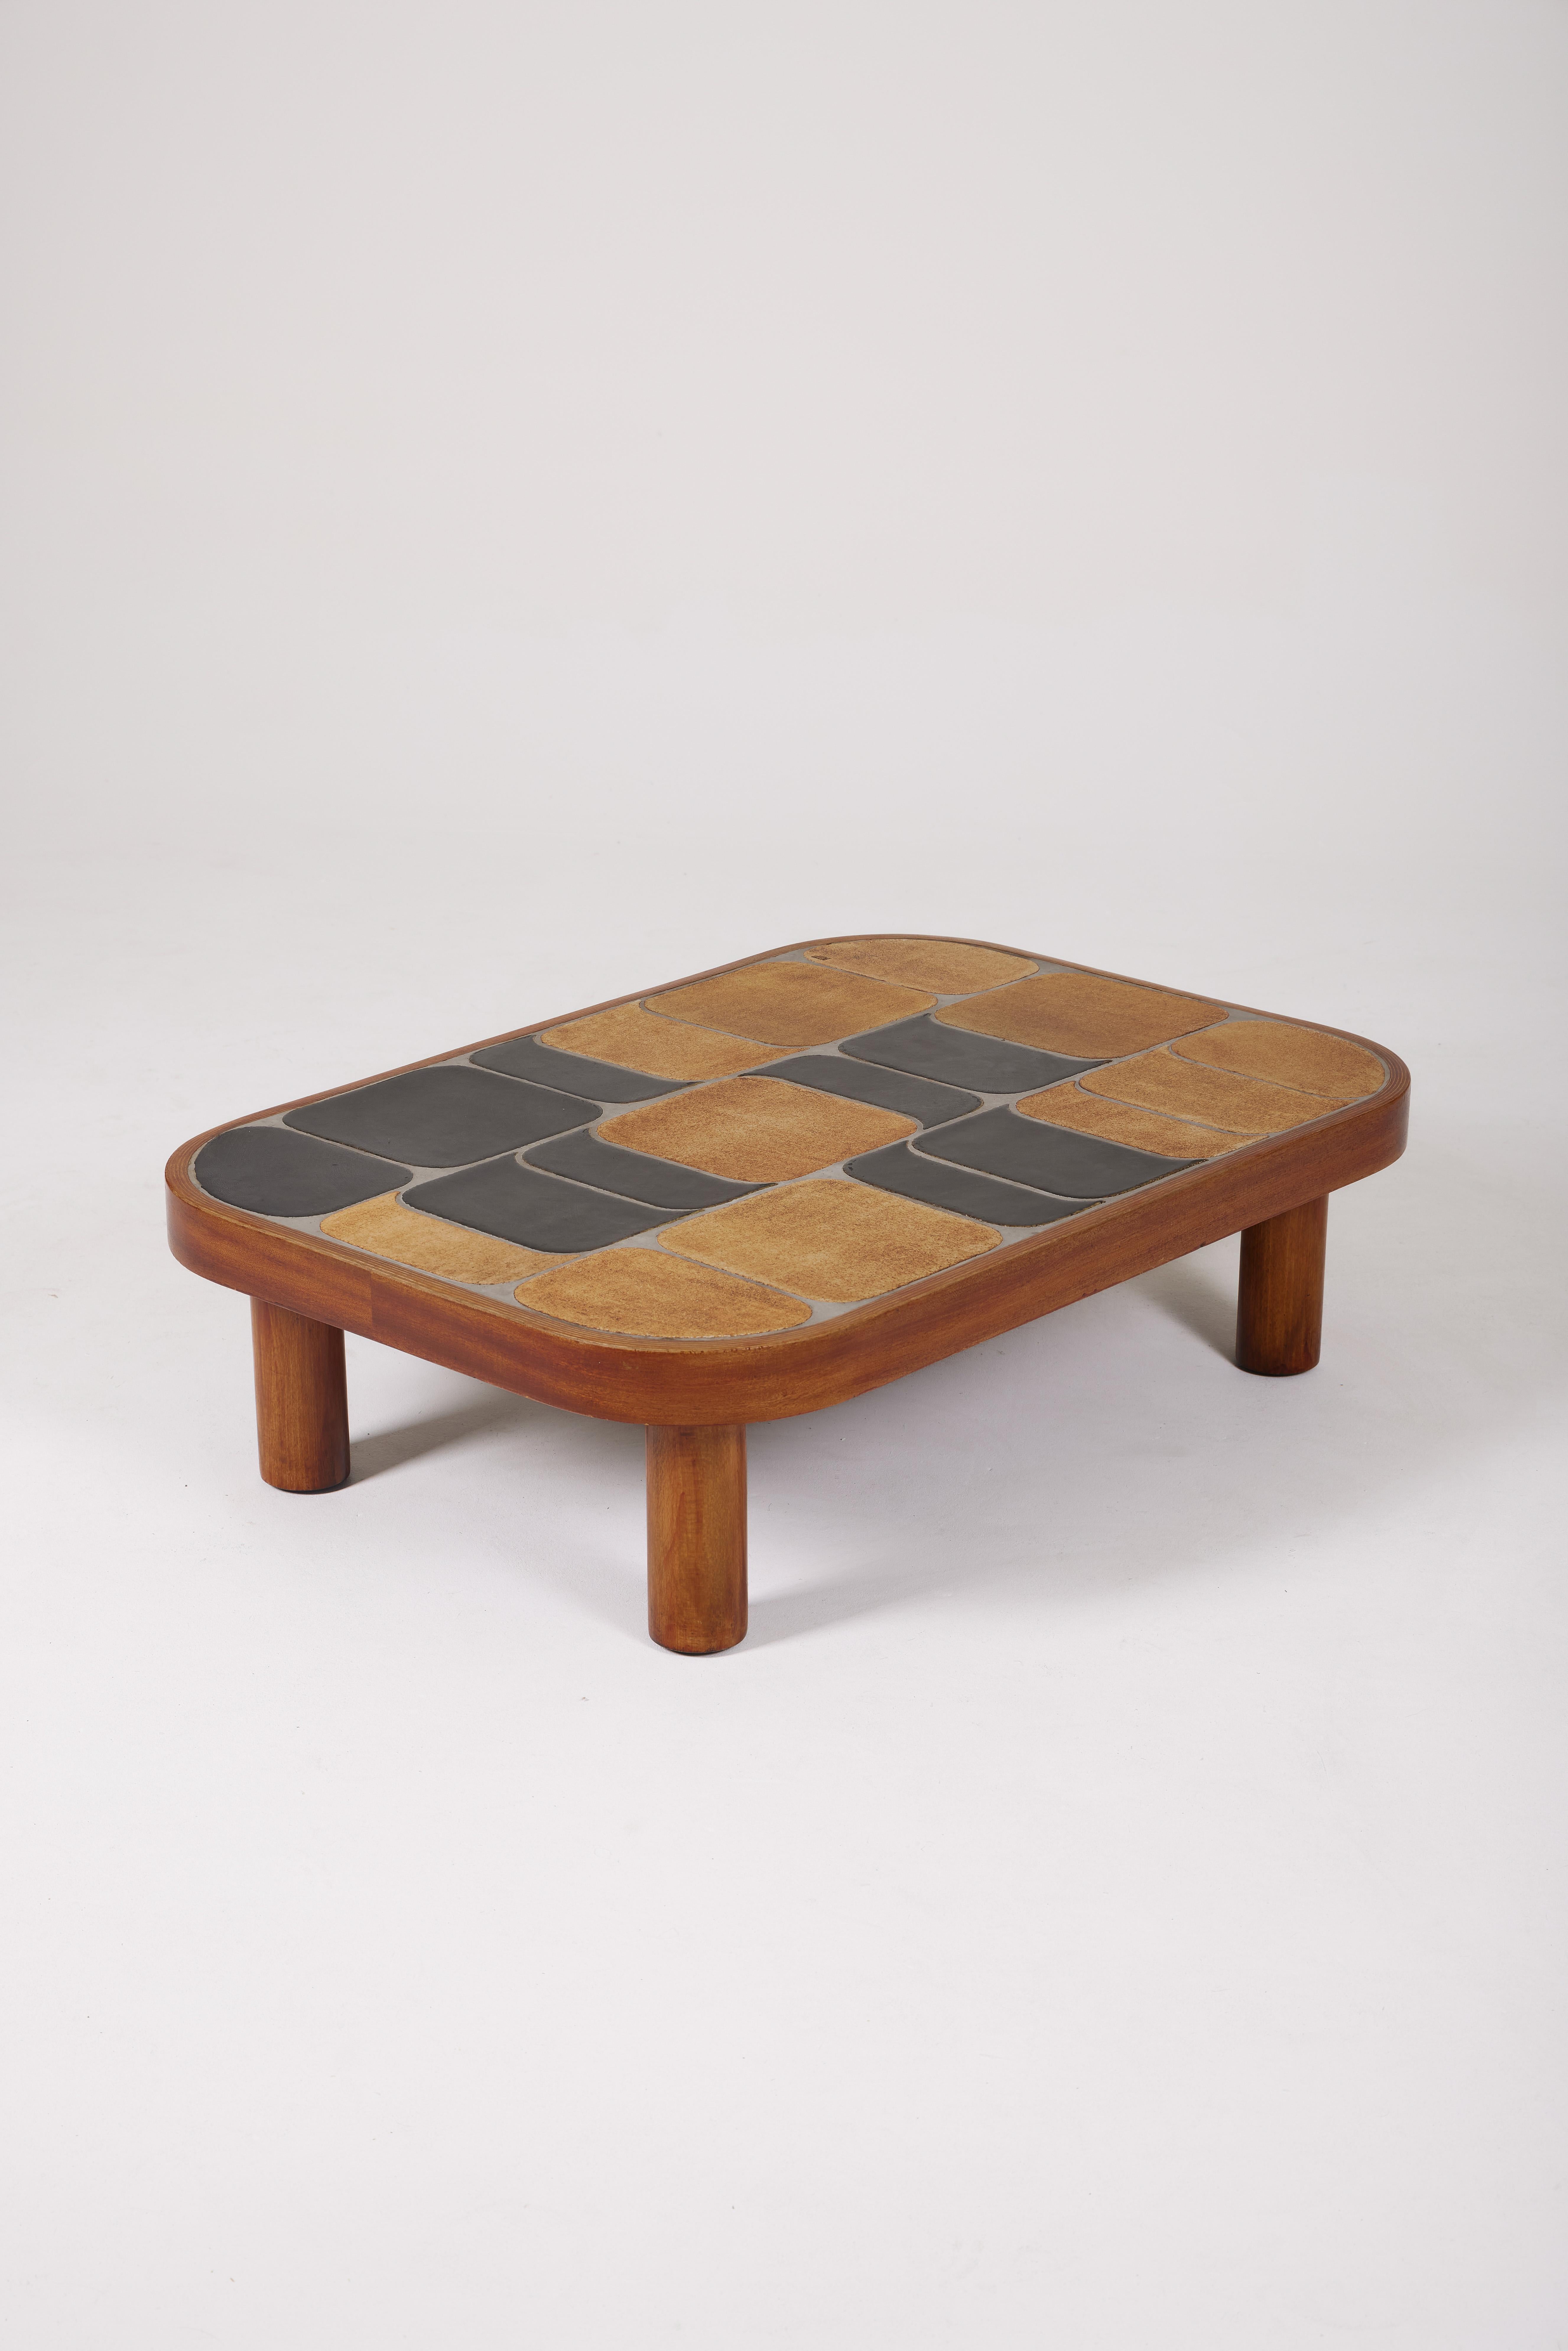 Ceramic Shogun coffee table by Roger Capron, 1970s